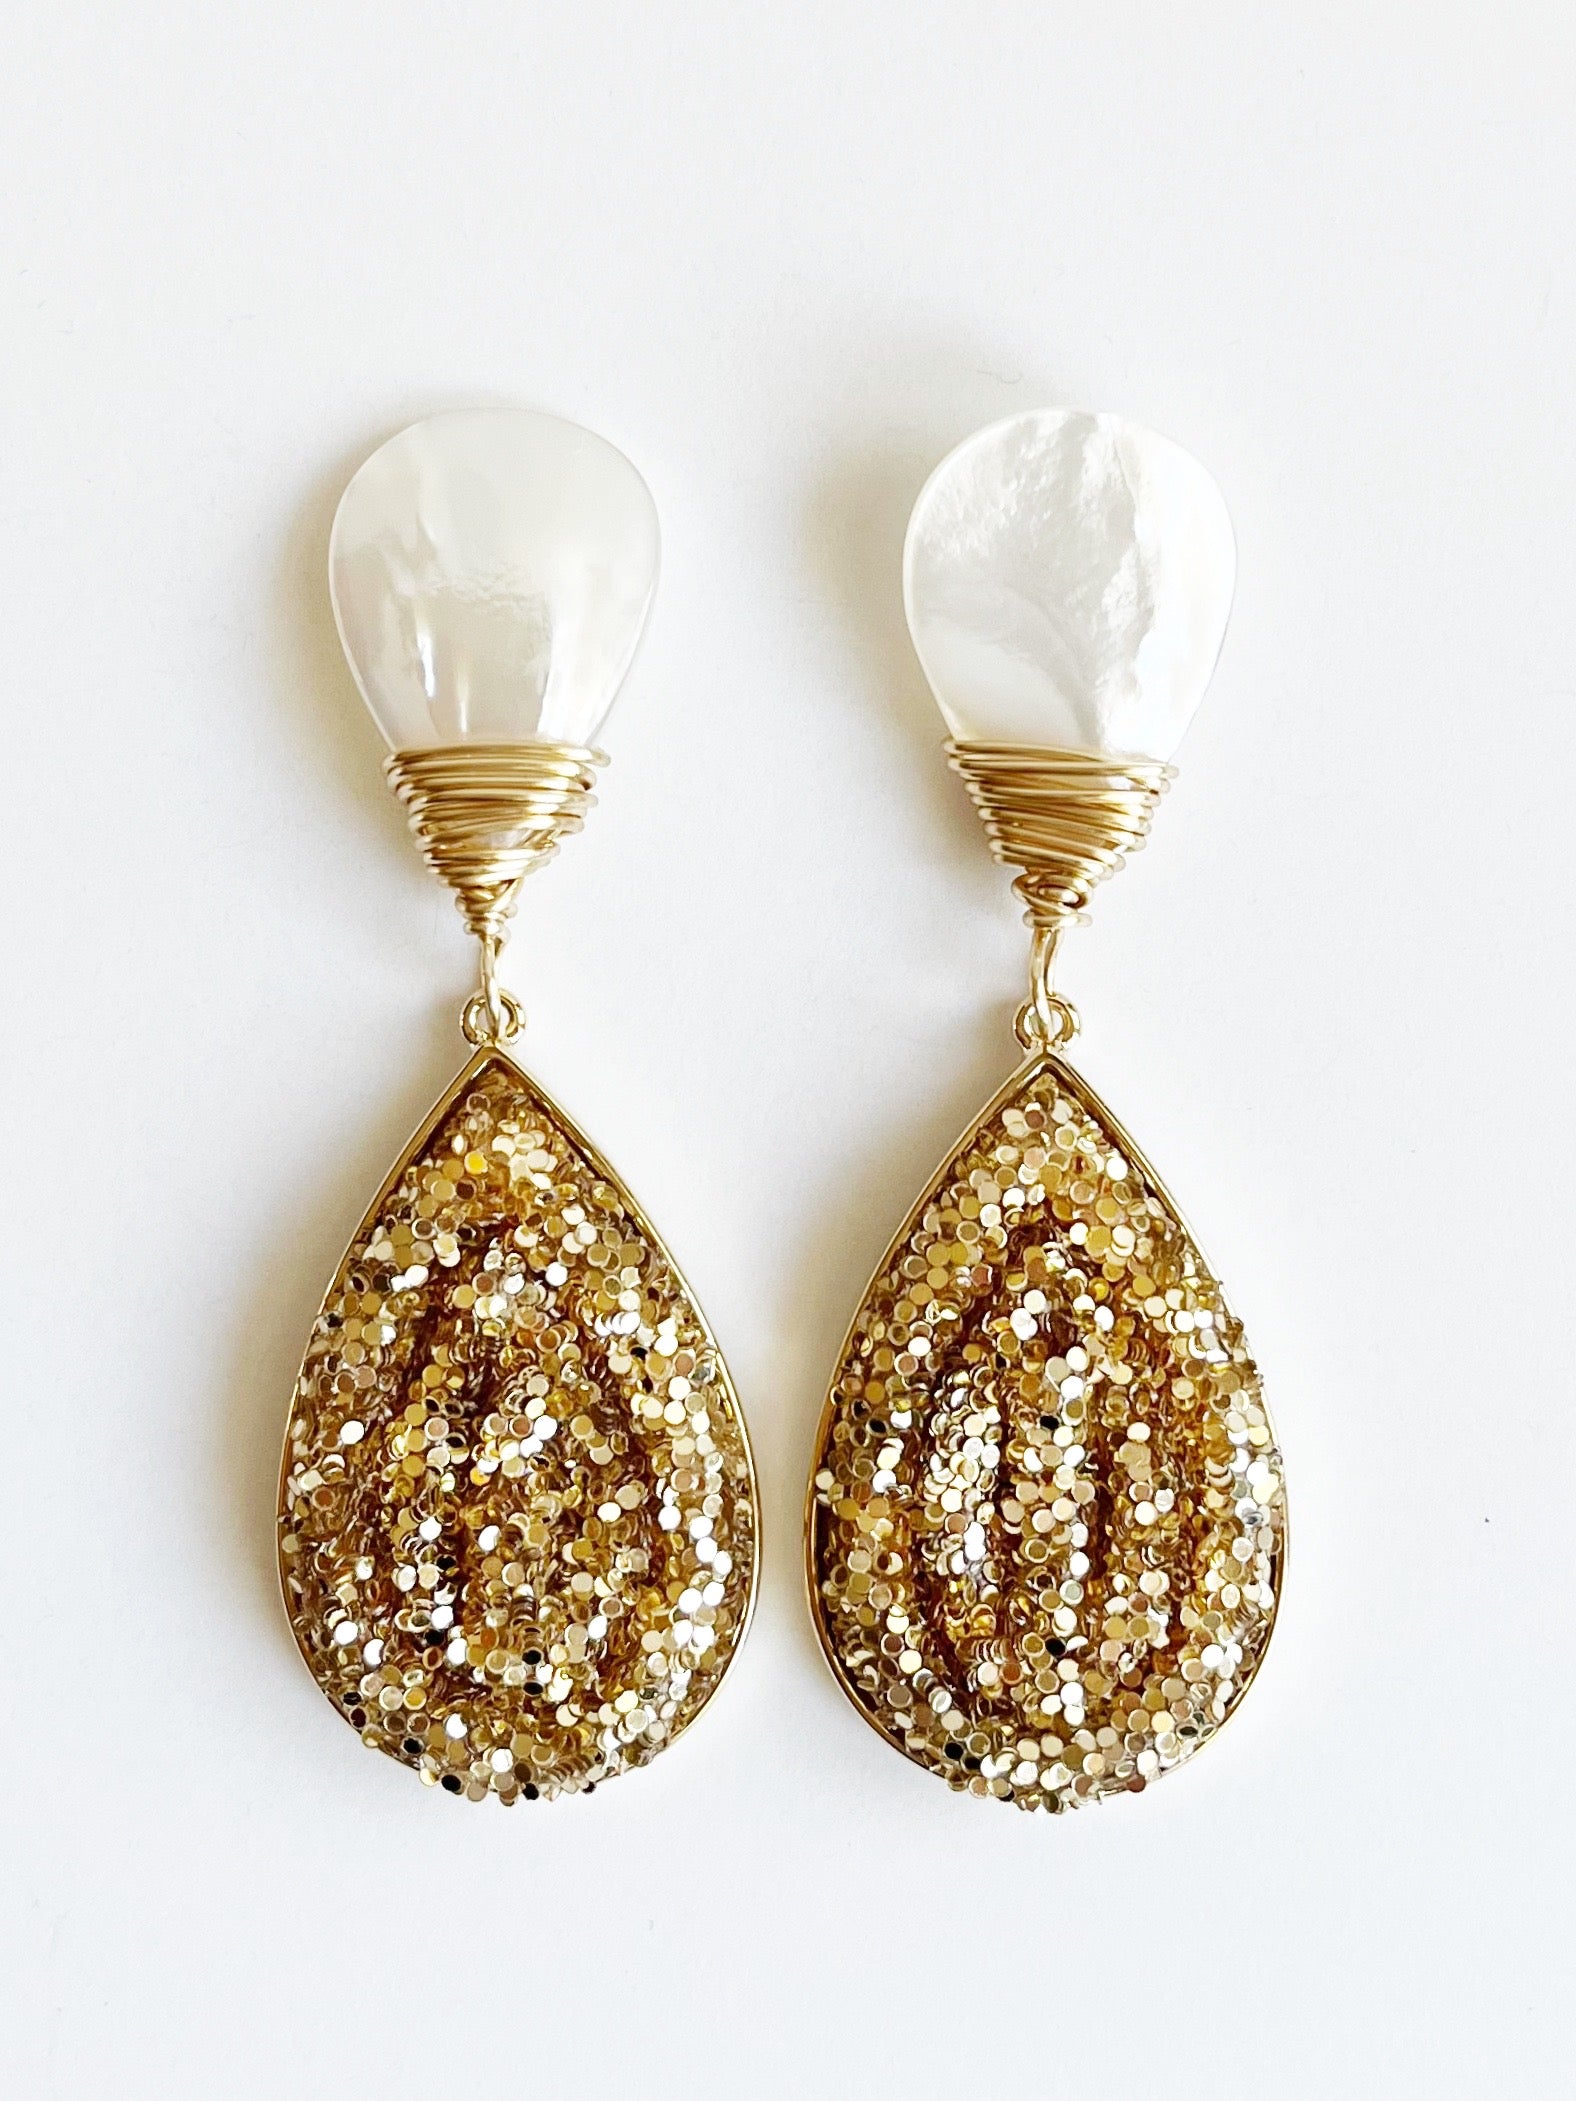 gold glitter teardrop earrings with mother of pearl stud